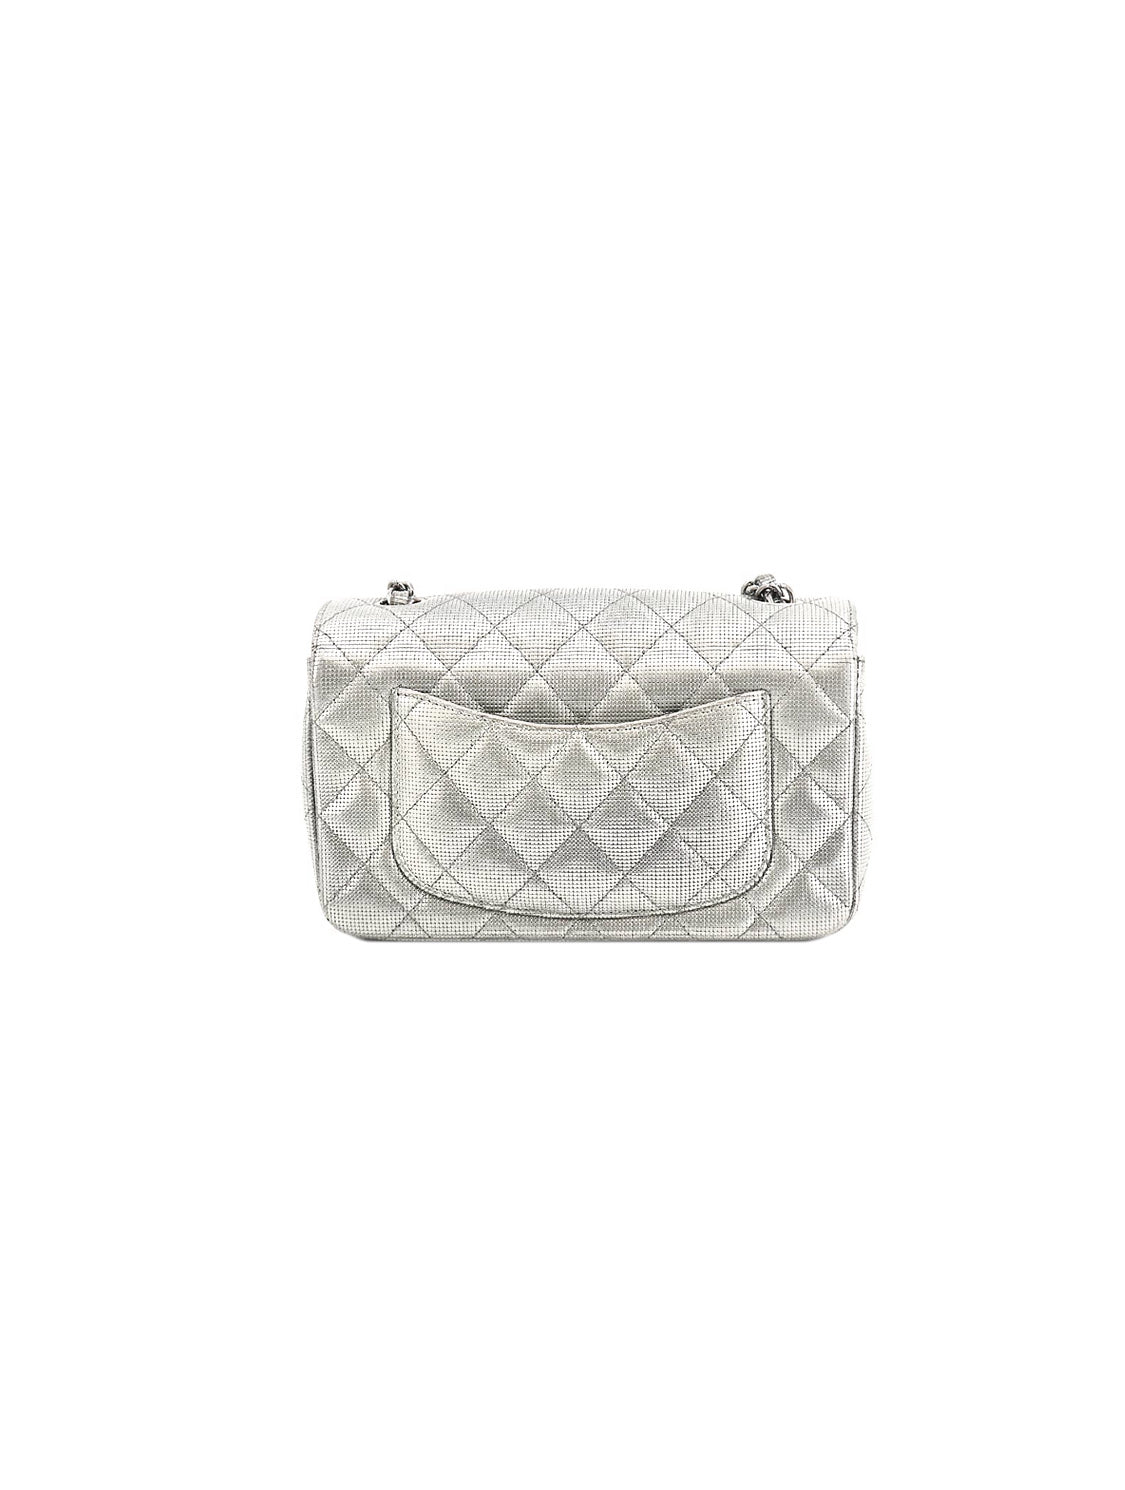 Chanel F/W 2015-2016 Silver Small Matresse Flap Bag